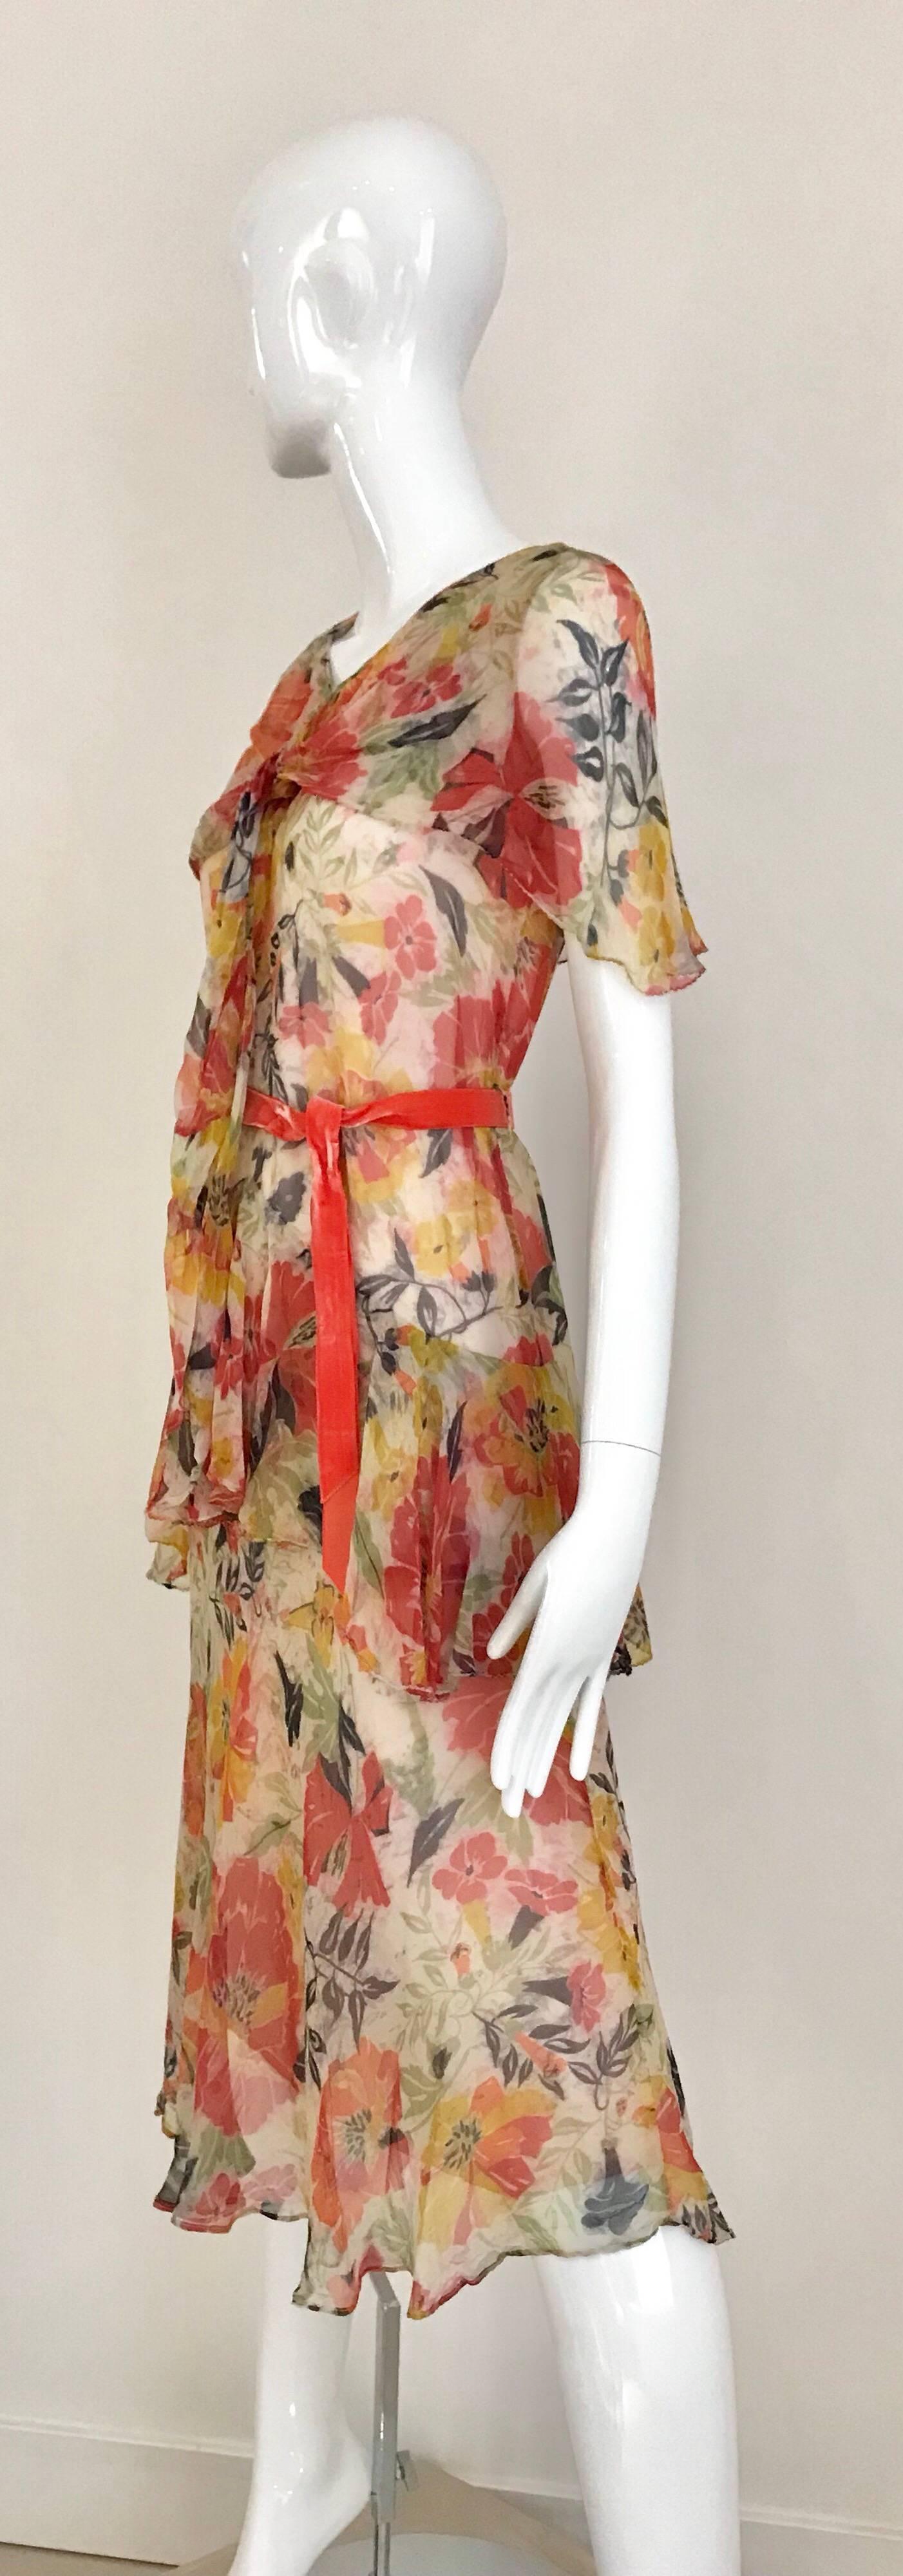 Women's 1920s Floral Print Silk Chiffon Summer Day Dress